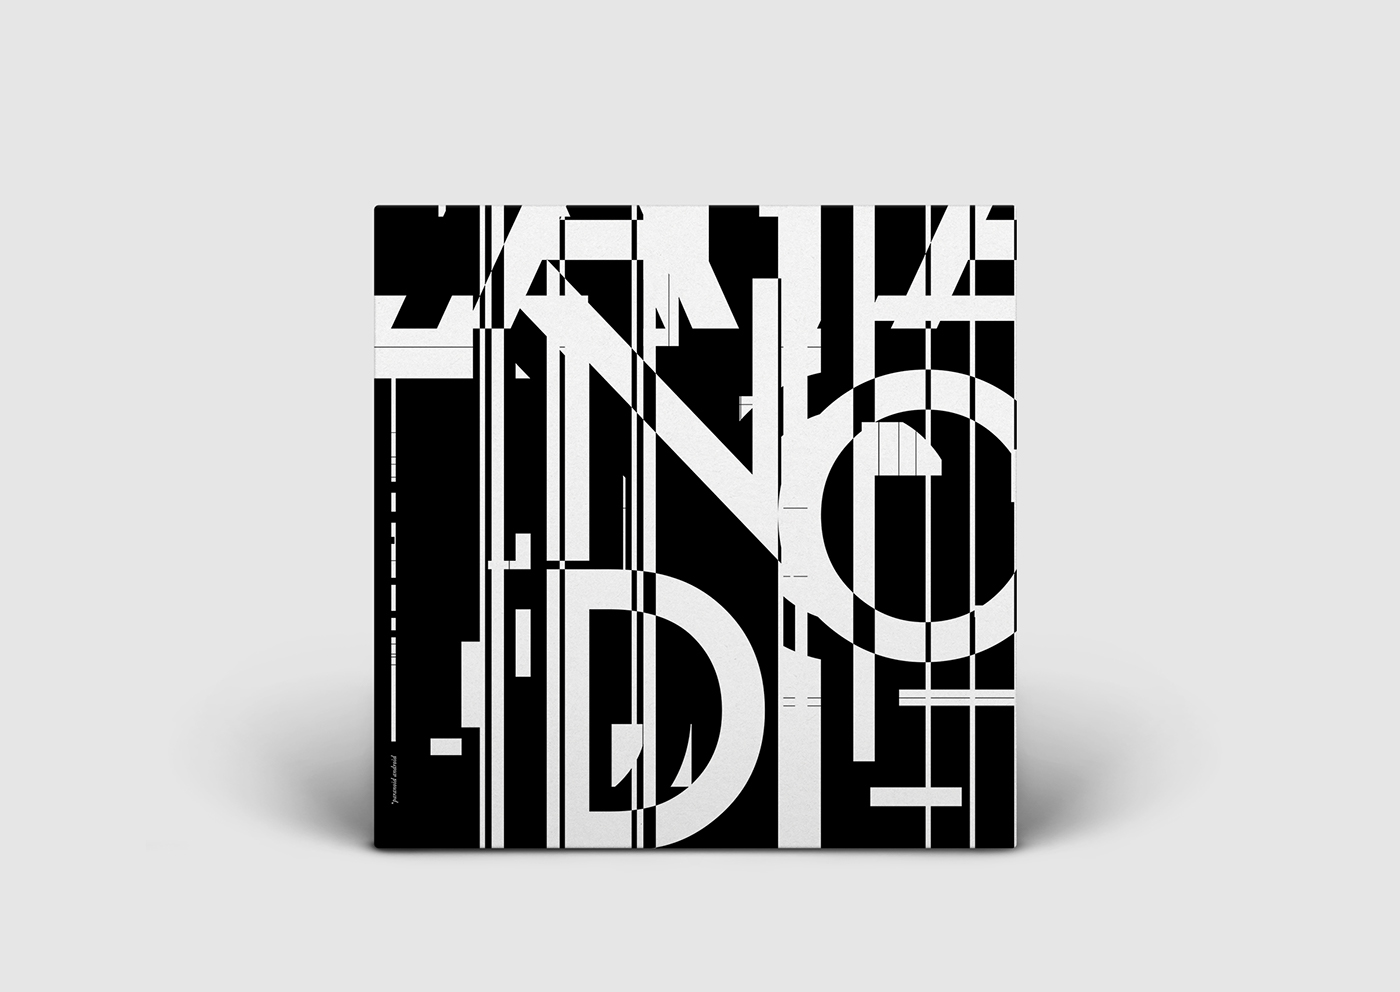 paranoid android Thomé york typo Glitch Radiohead vinyl poster Typorama black White graphic Futura geometric